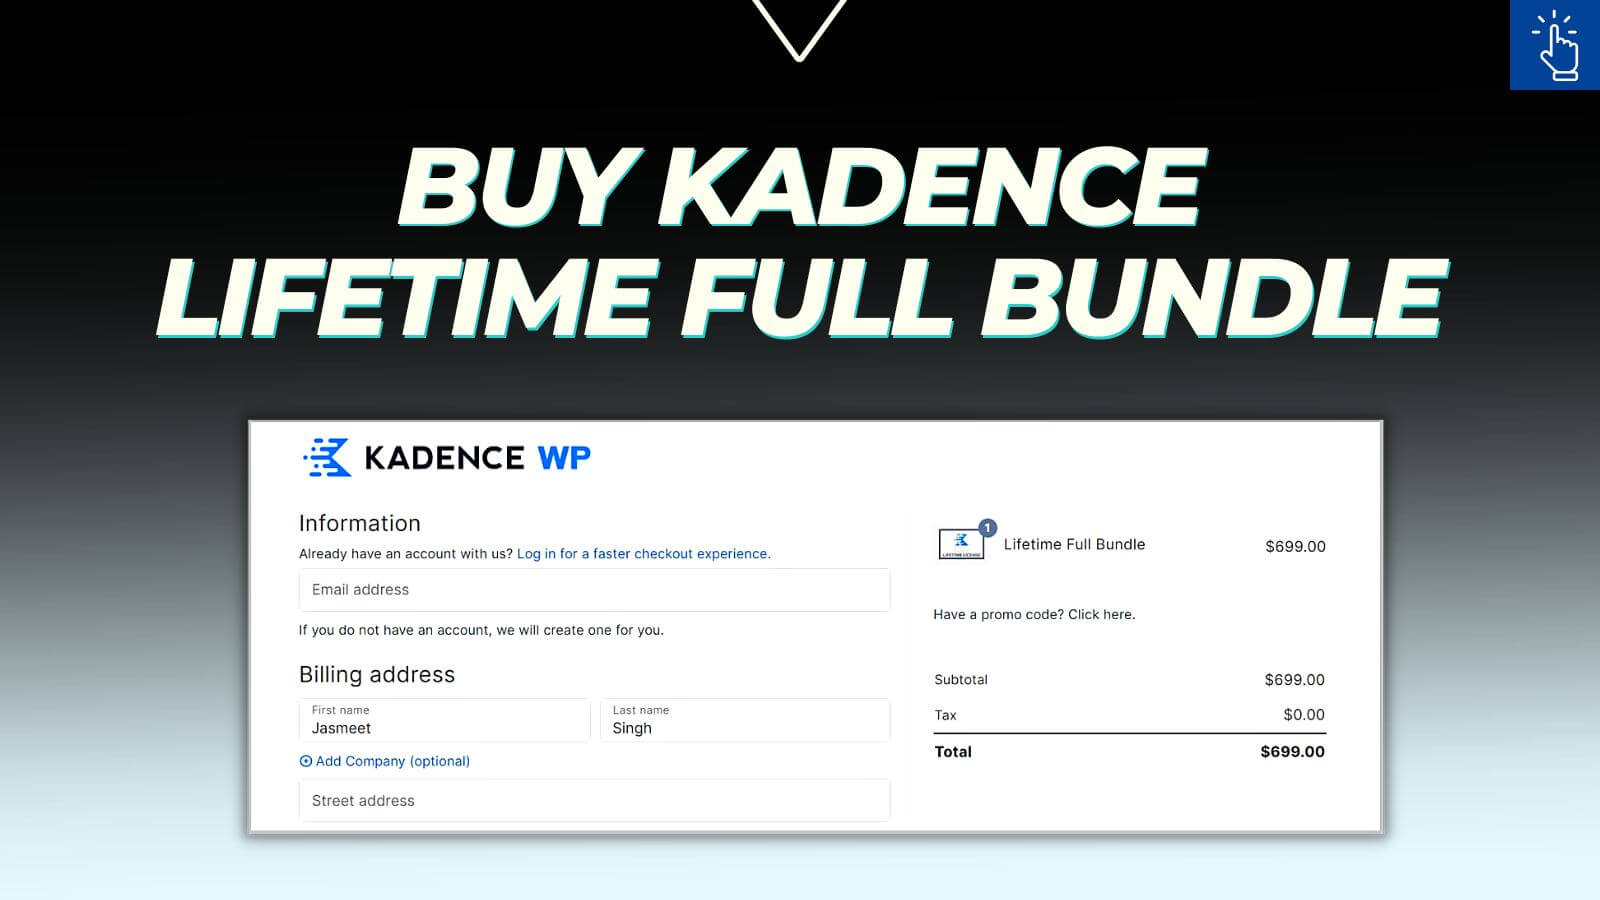 How to Buy Kadence Full Lifetime Bundle